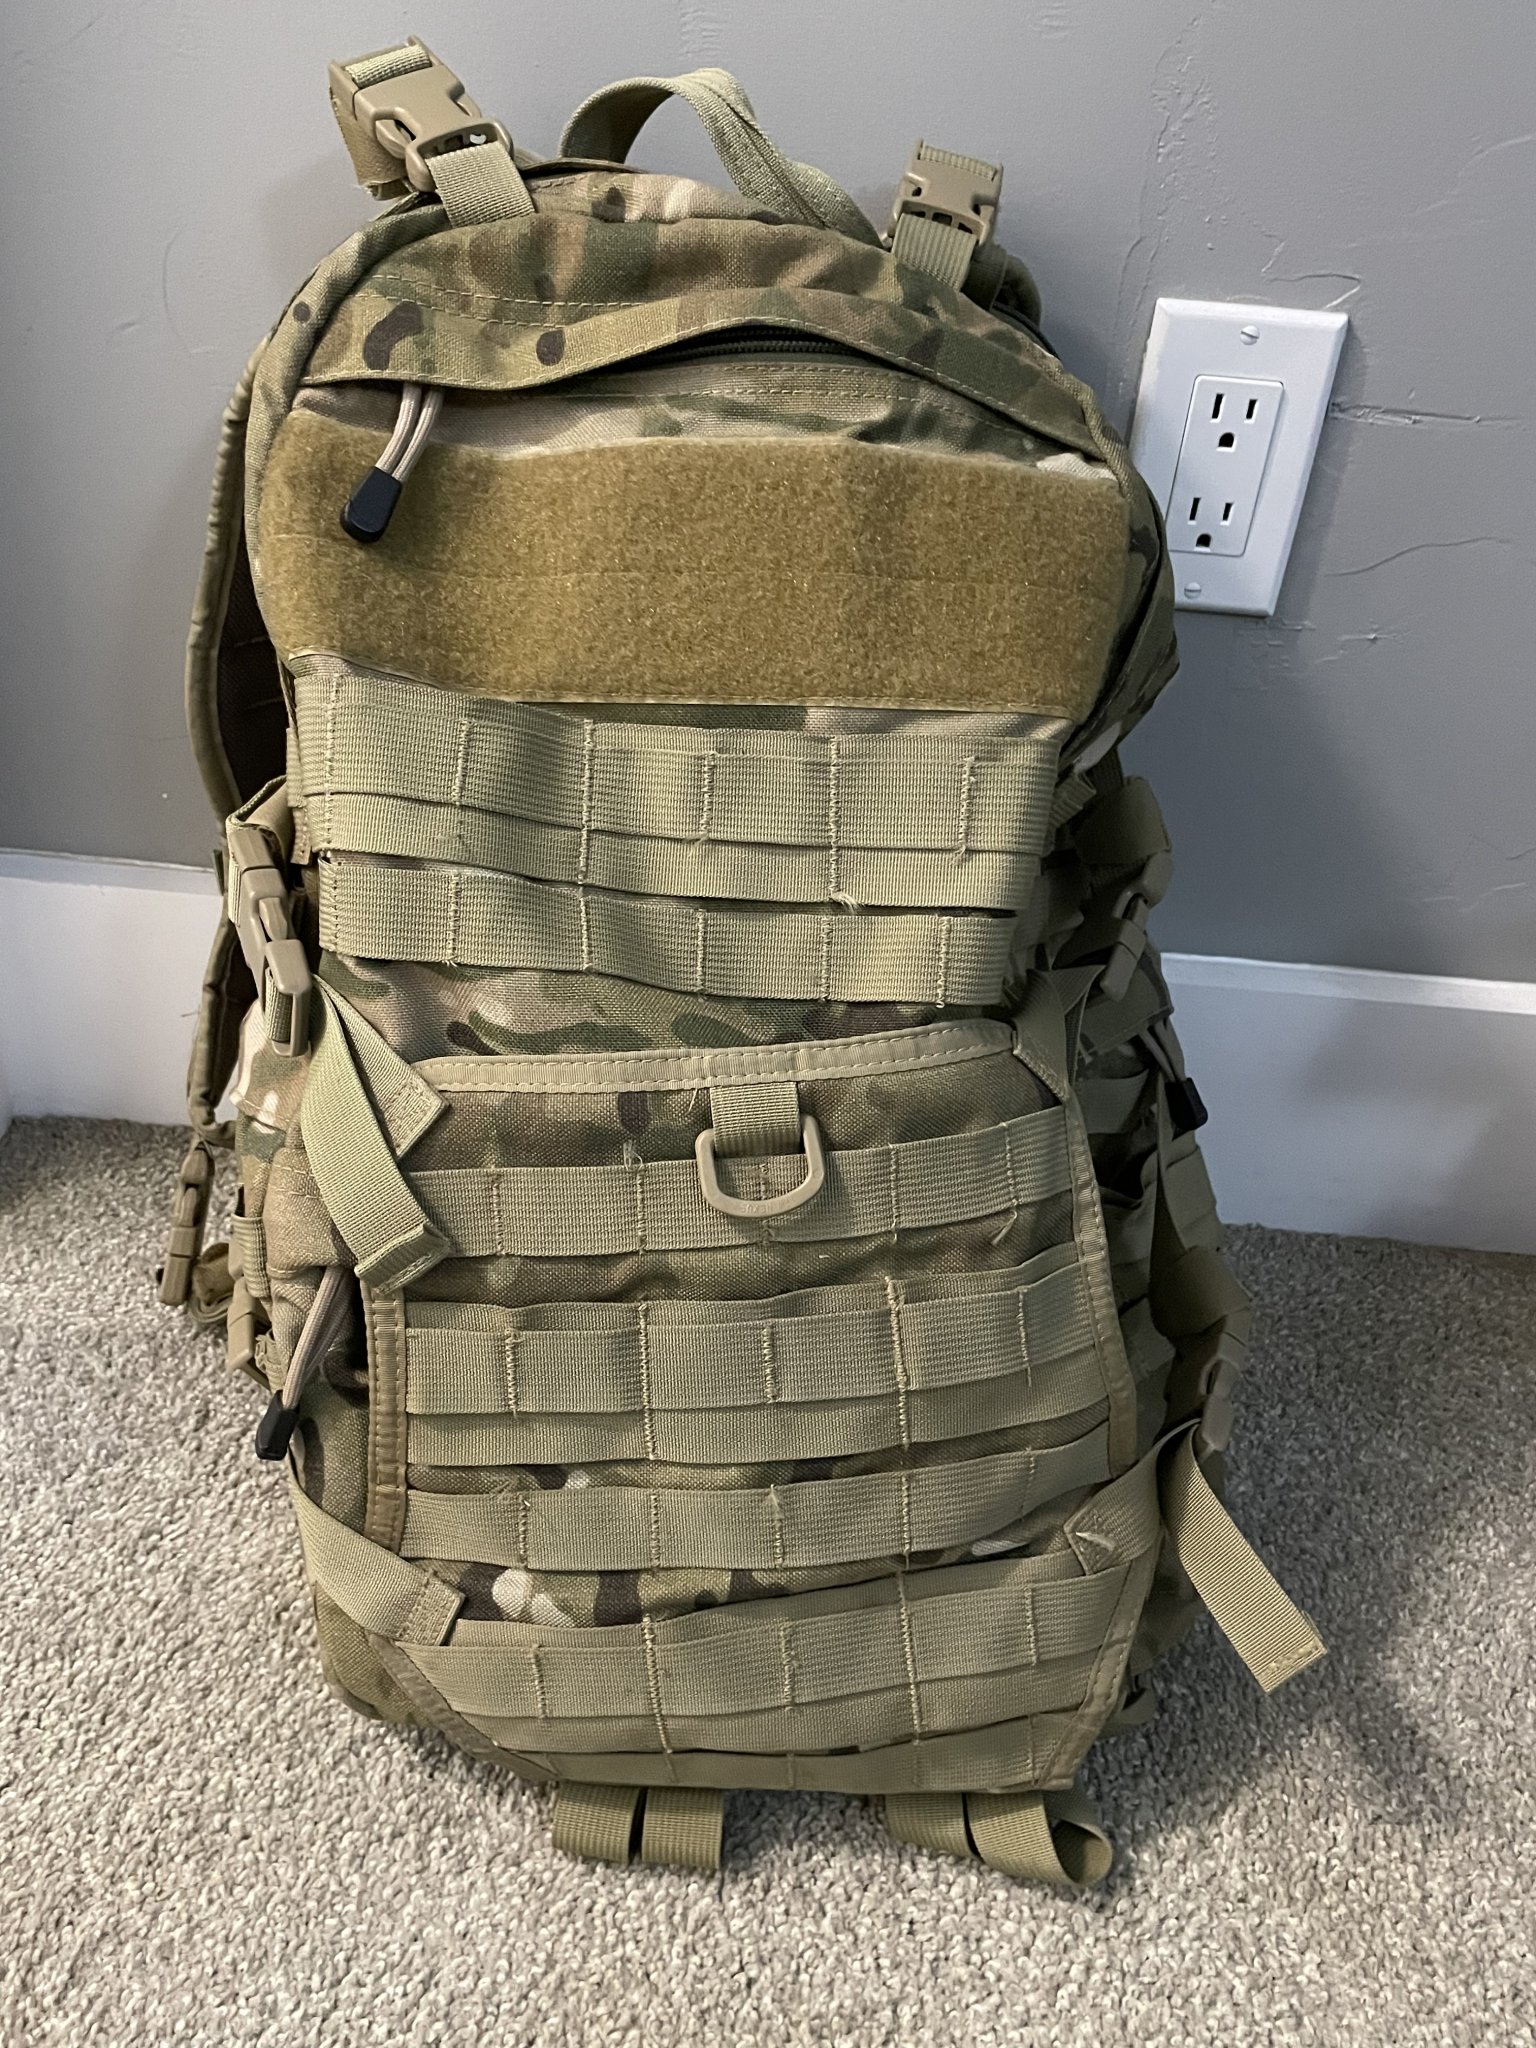 SOLD - TAD Gear Fastpack EDC - 1st Gen PRICE DROP | Sniper's Hide Forum